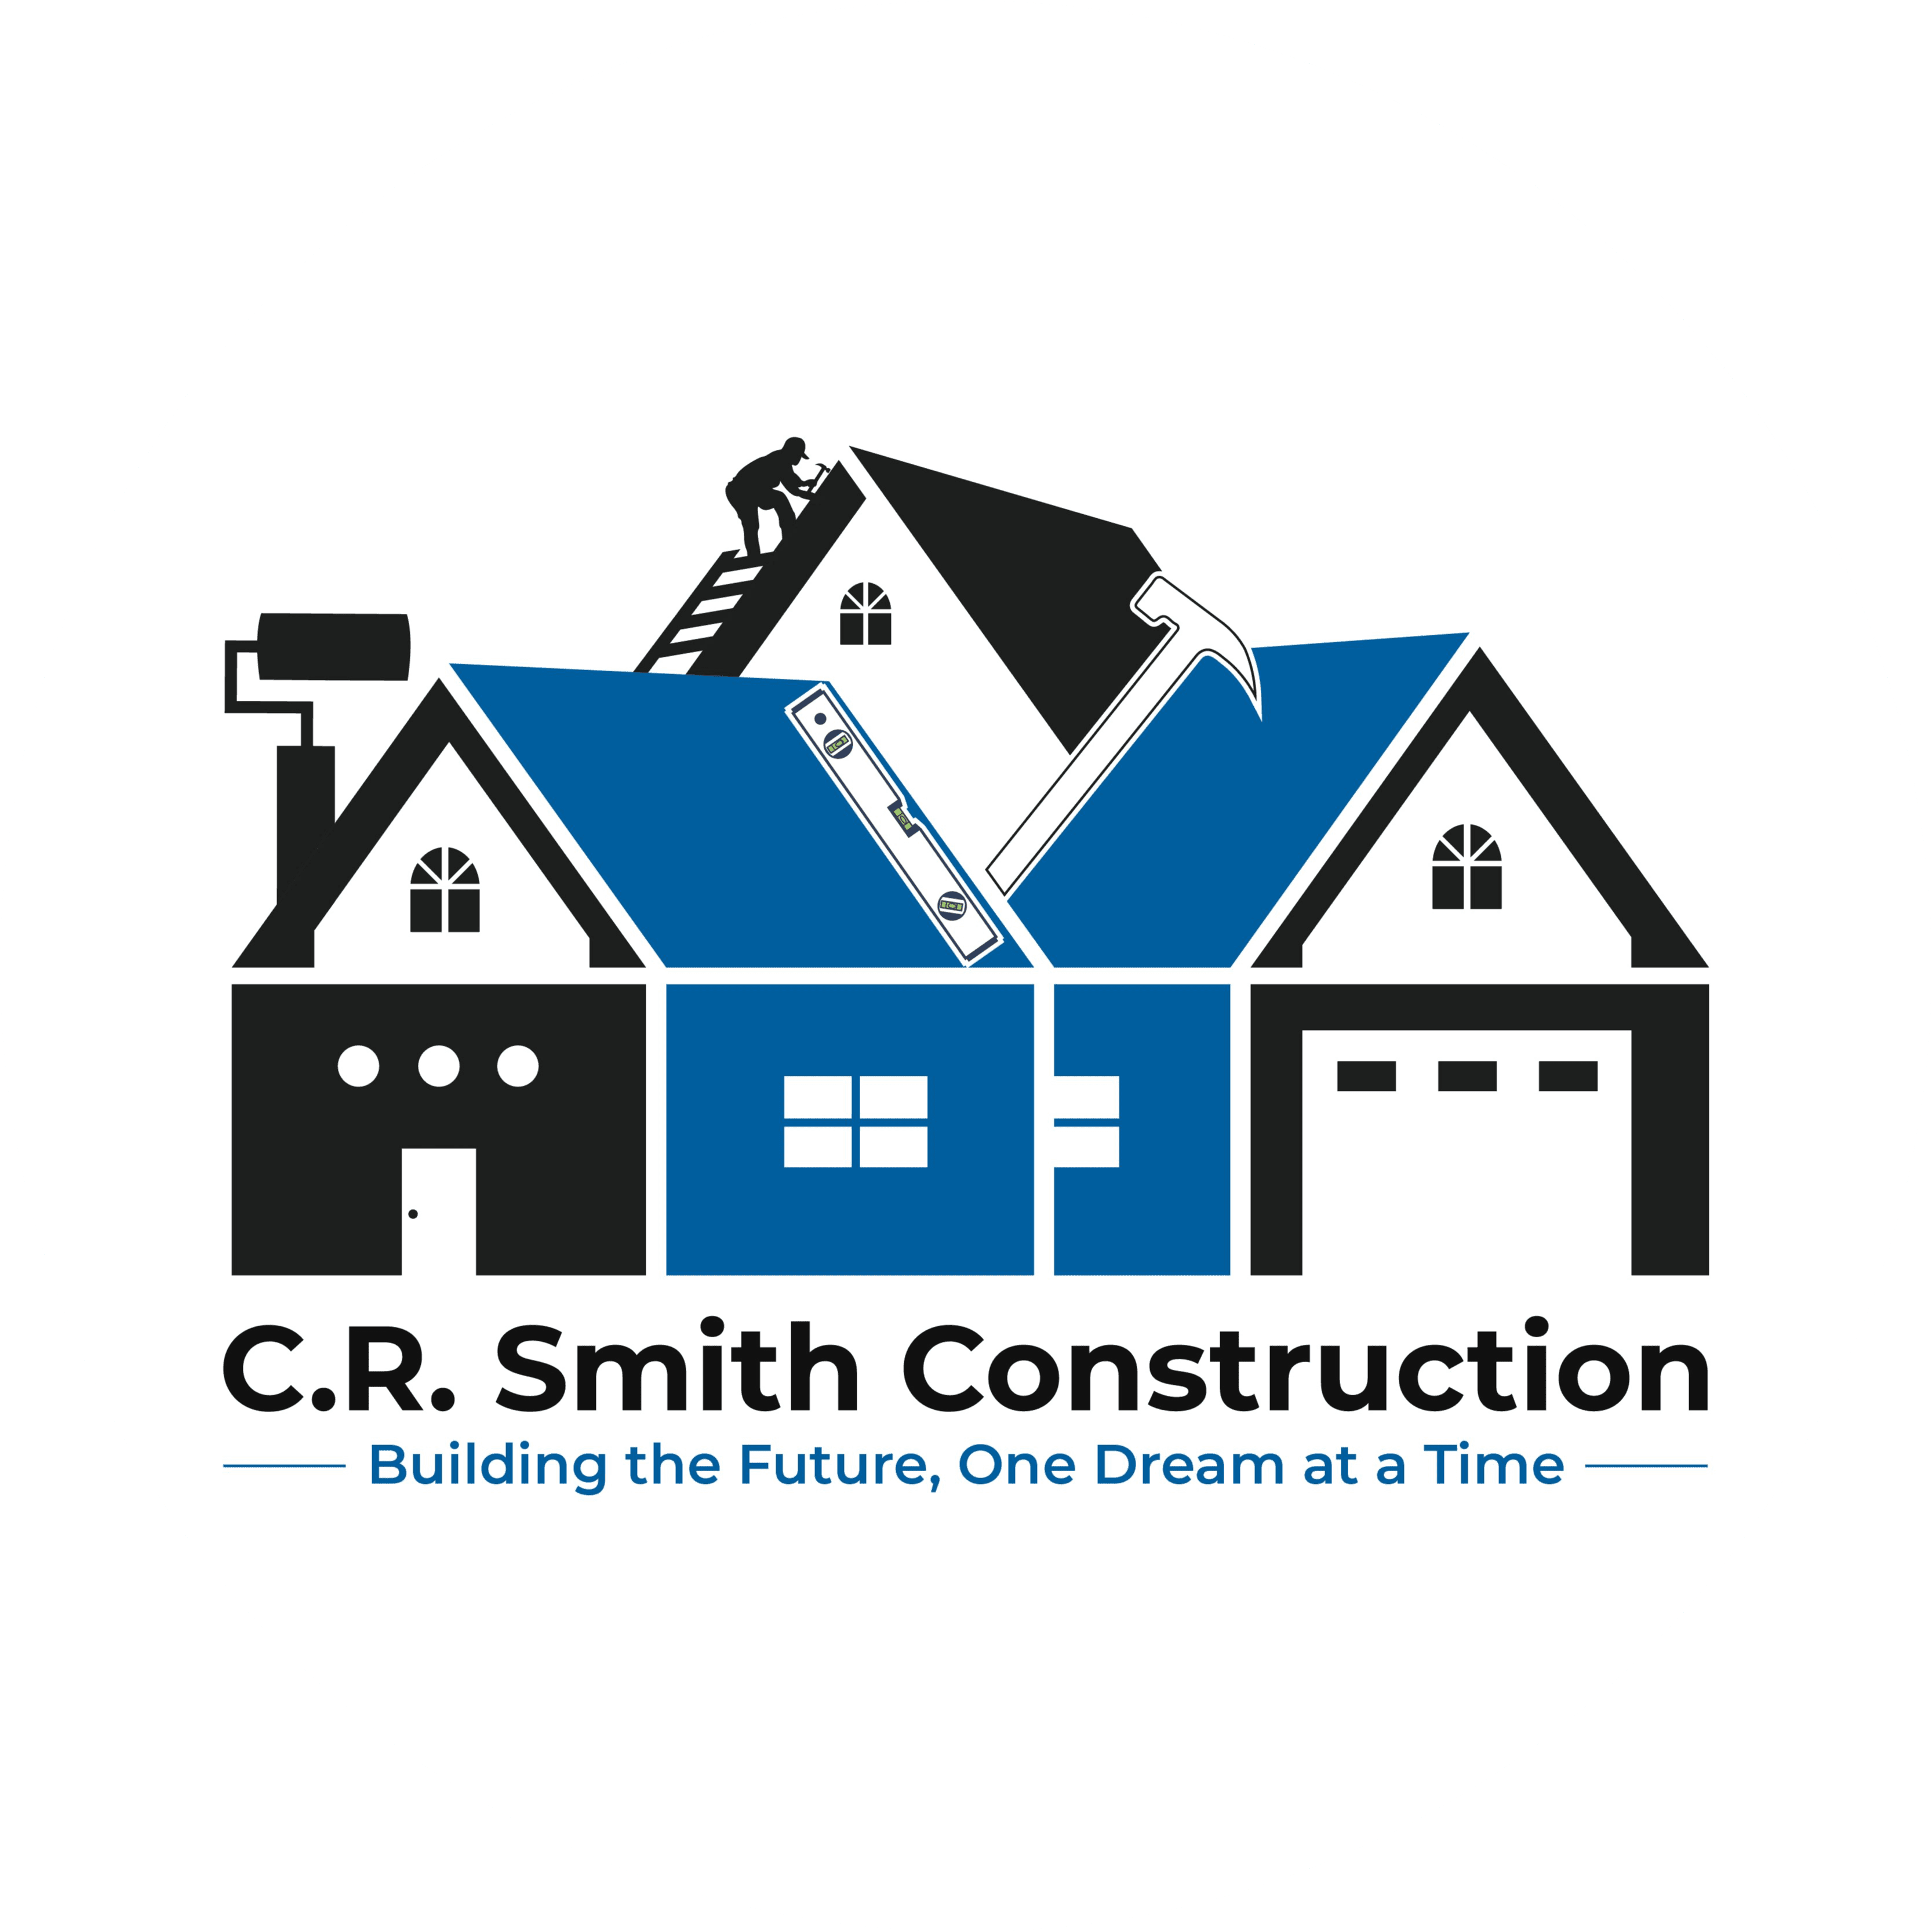 C. R. Smith Construction